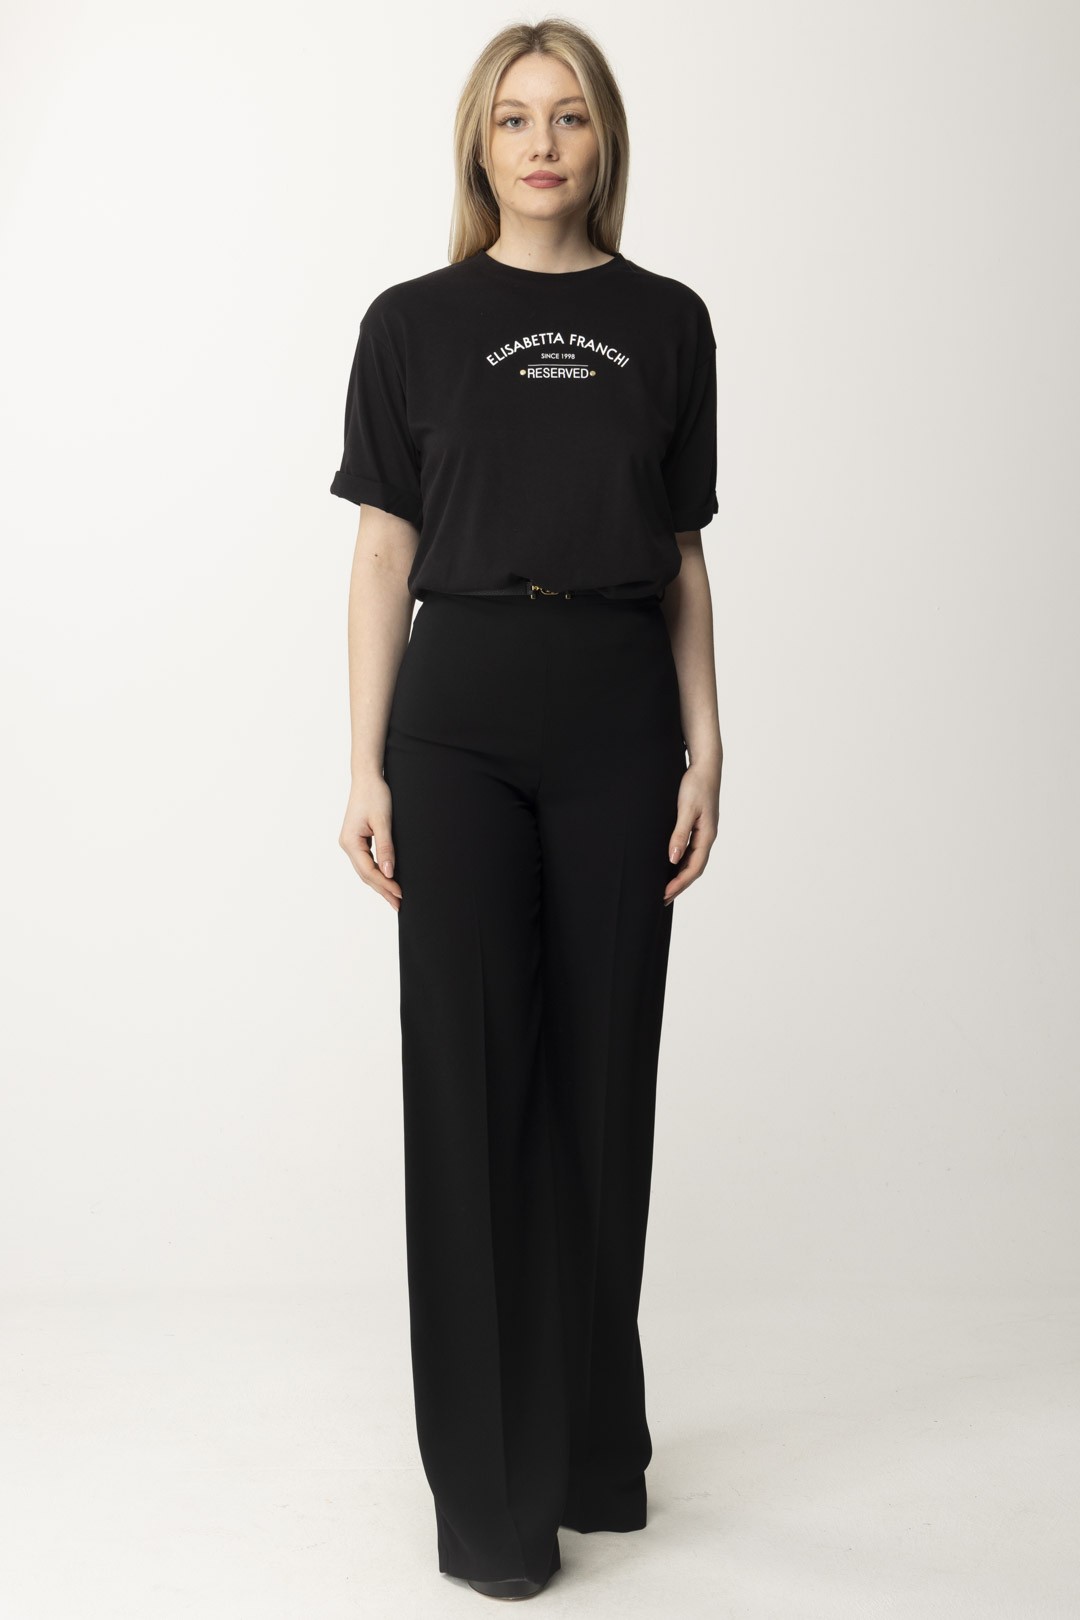 Anteprima: Elisabetta Franchi T-shirt con stampa Reserved Nero